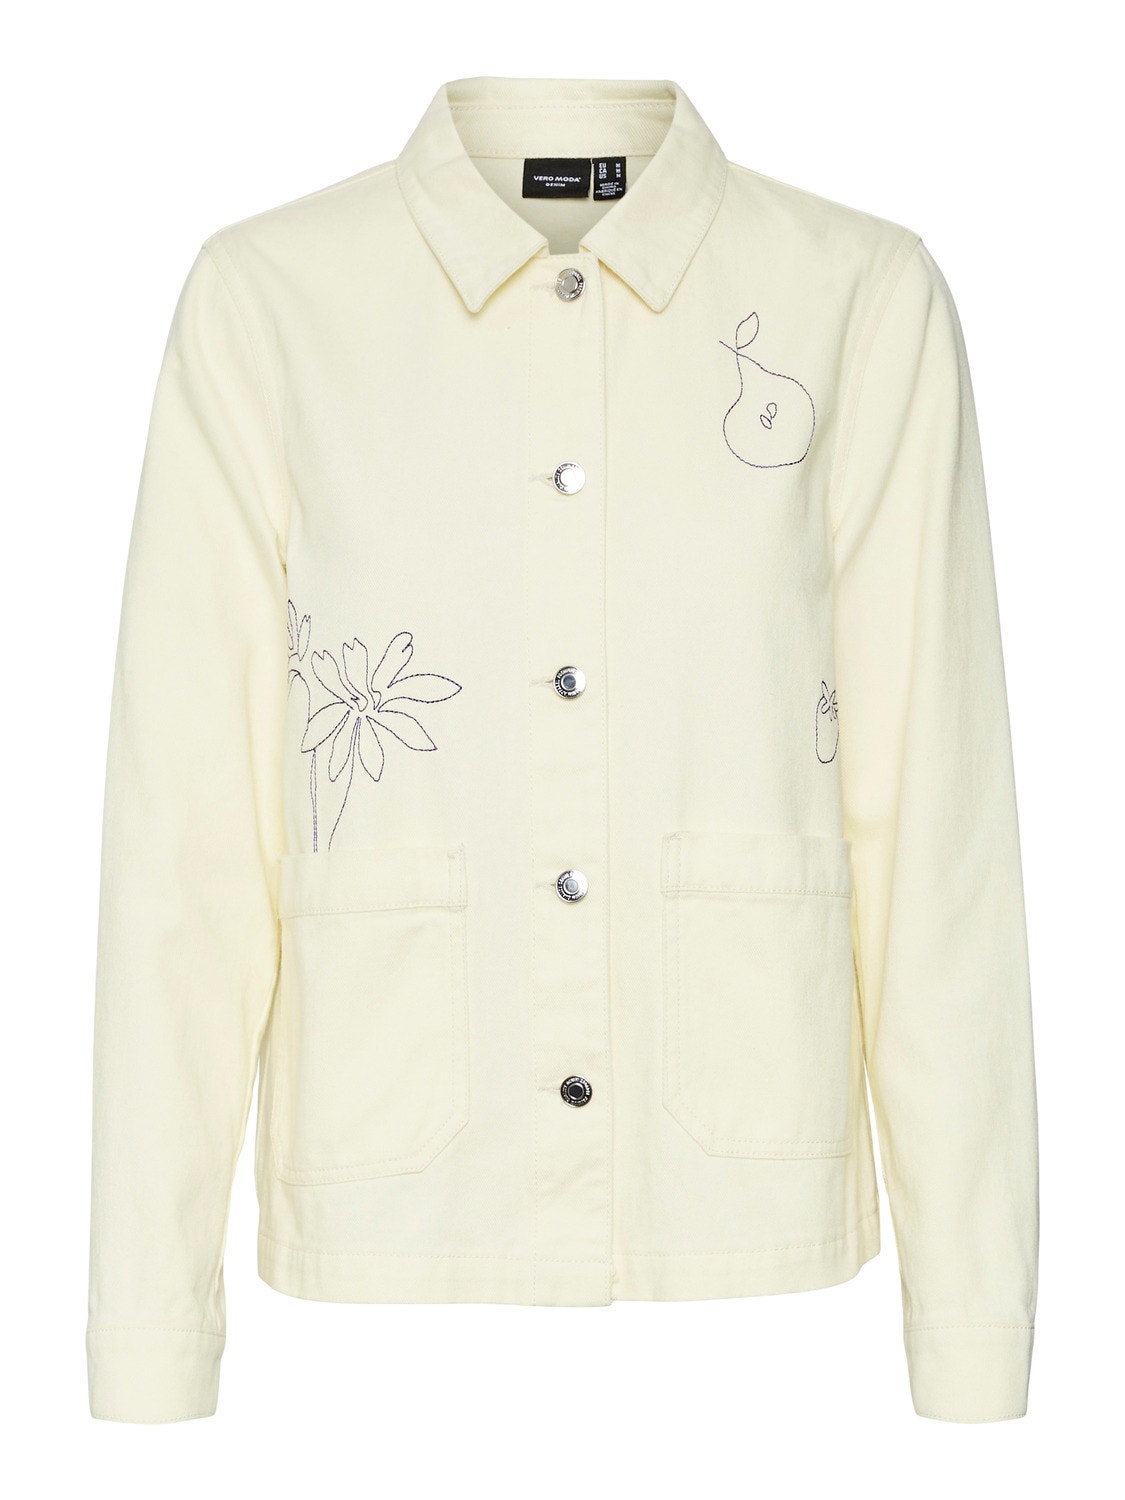 Vero Moda VMVILJA Denim jacket -Anise Flower - 10314575